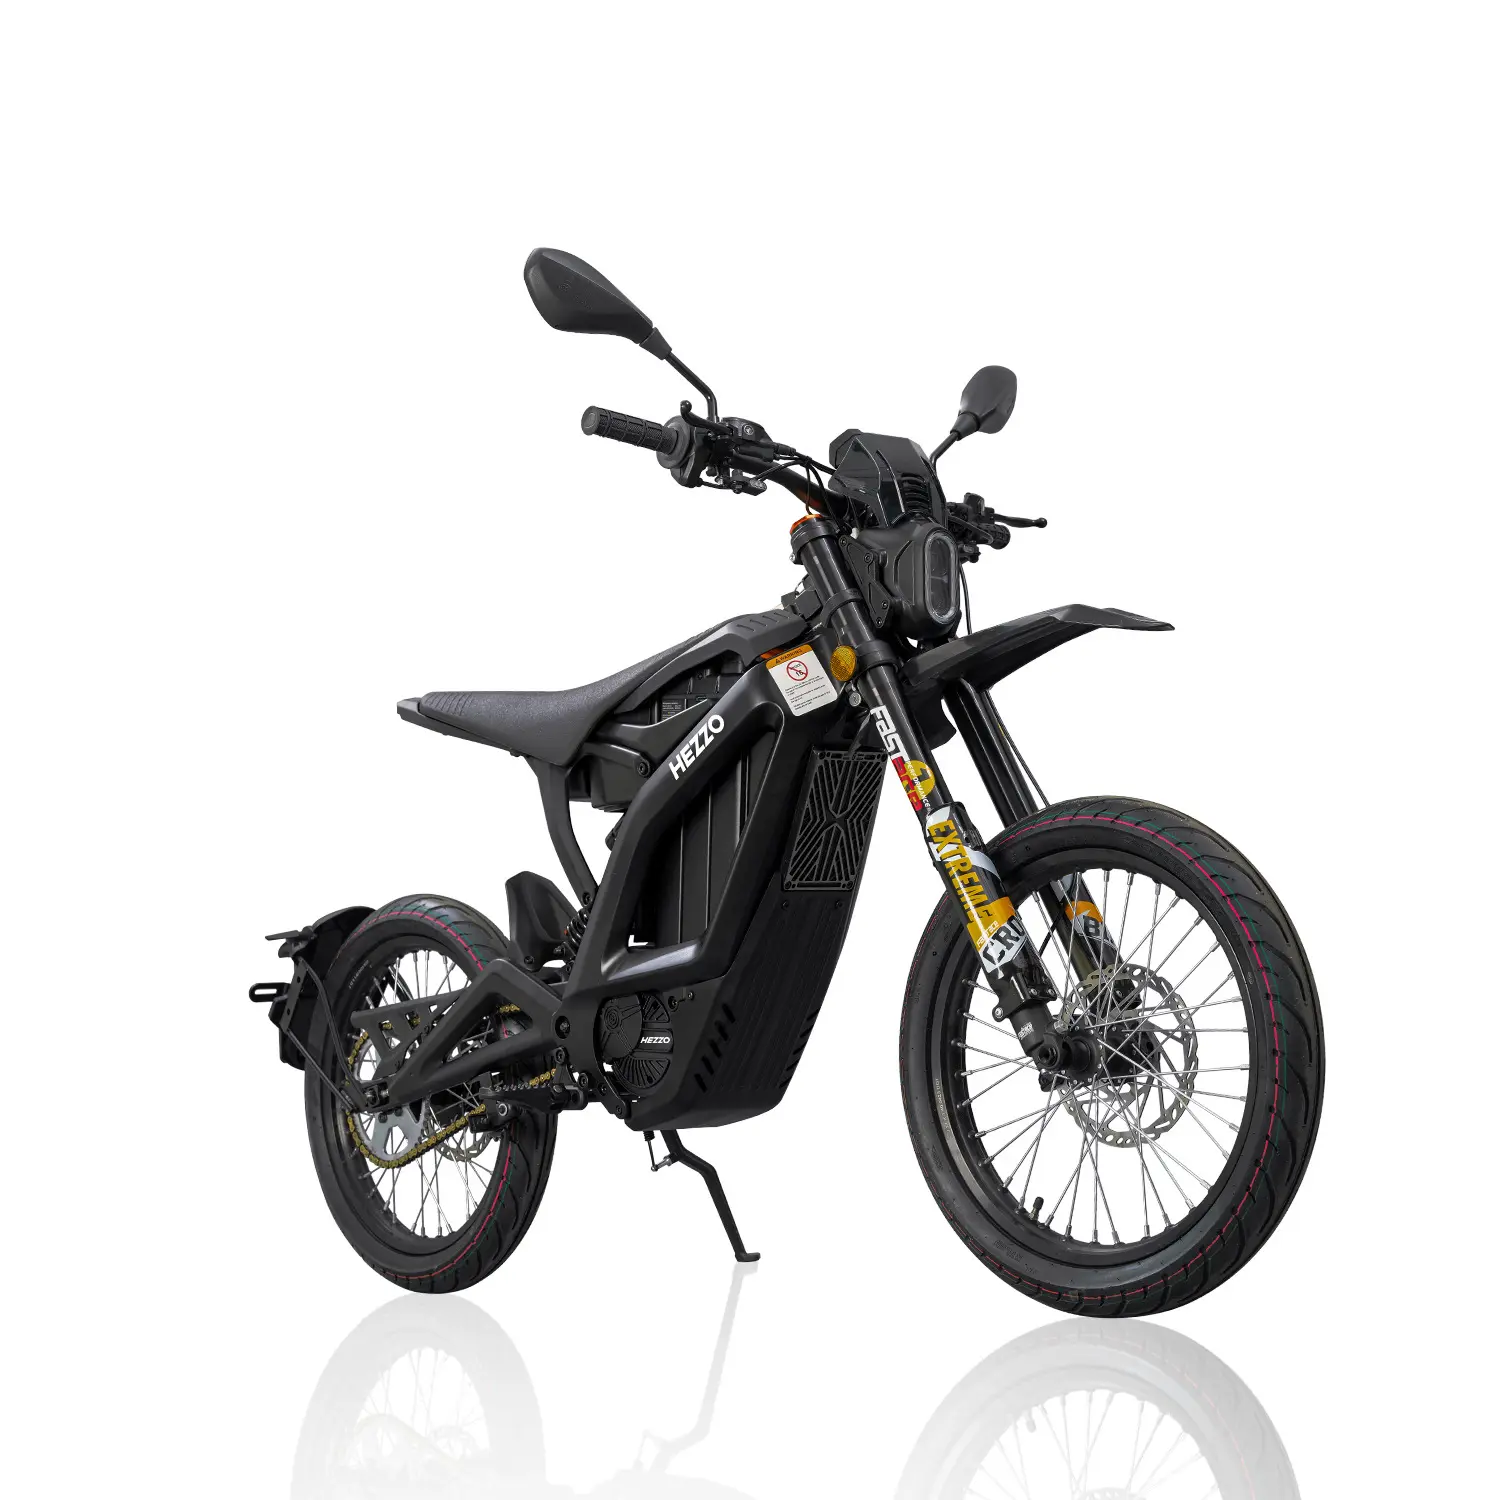 Nuovo 60V minimoto cina Motos Electrica OffRoad moto ciclomotore